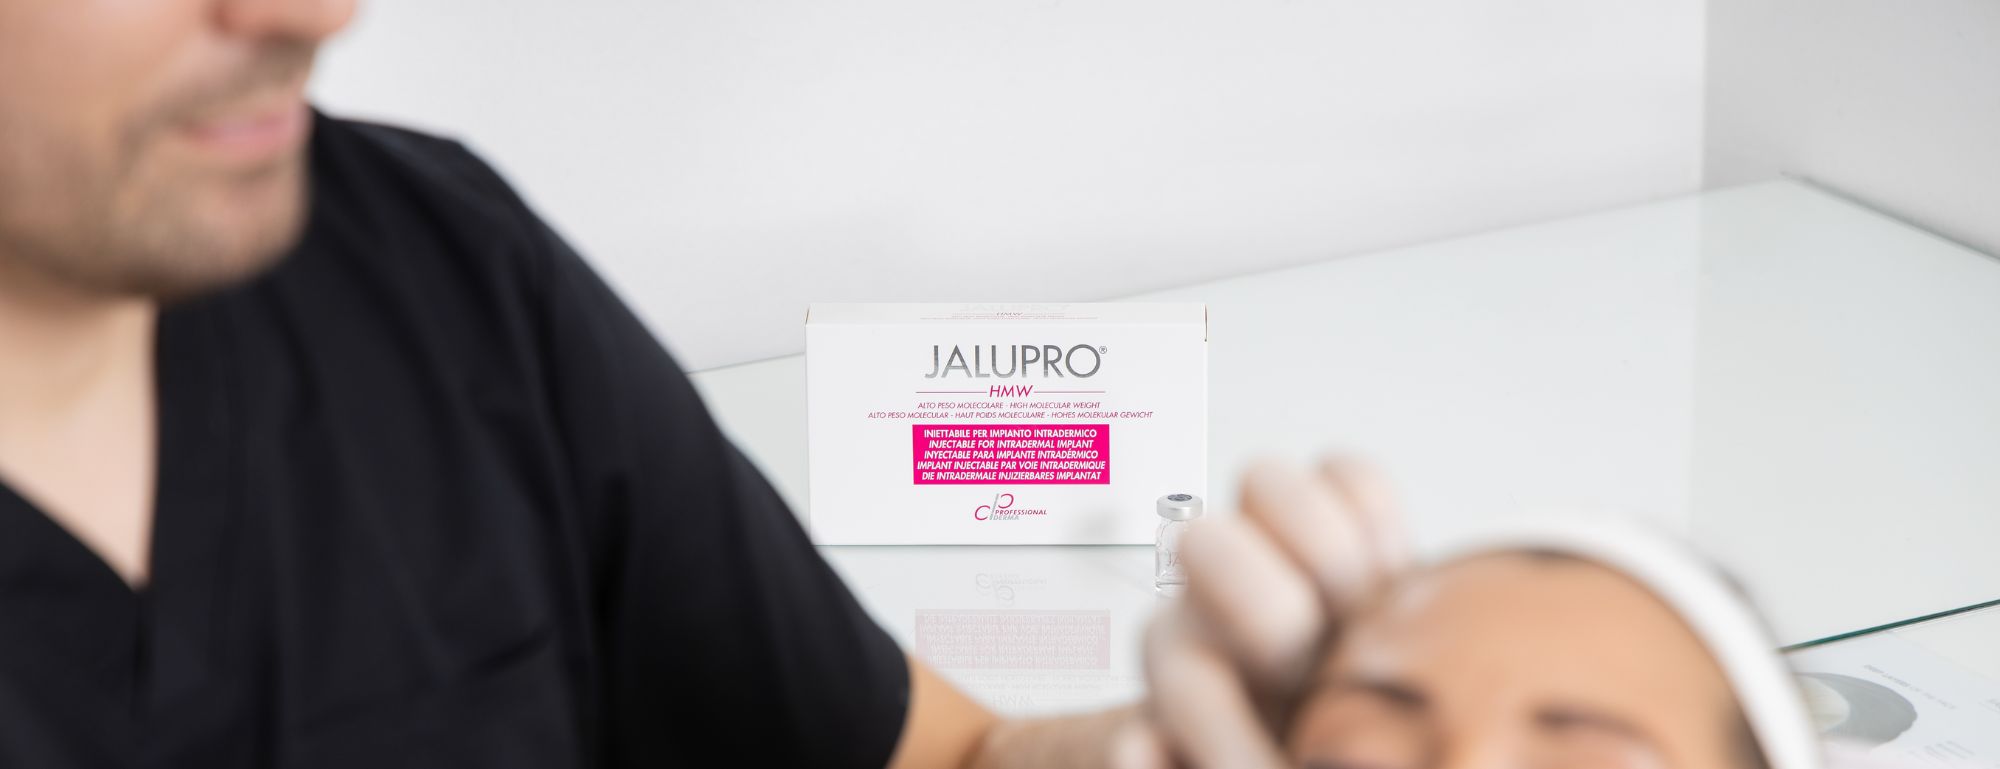 Jalupro treatment biorevision